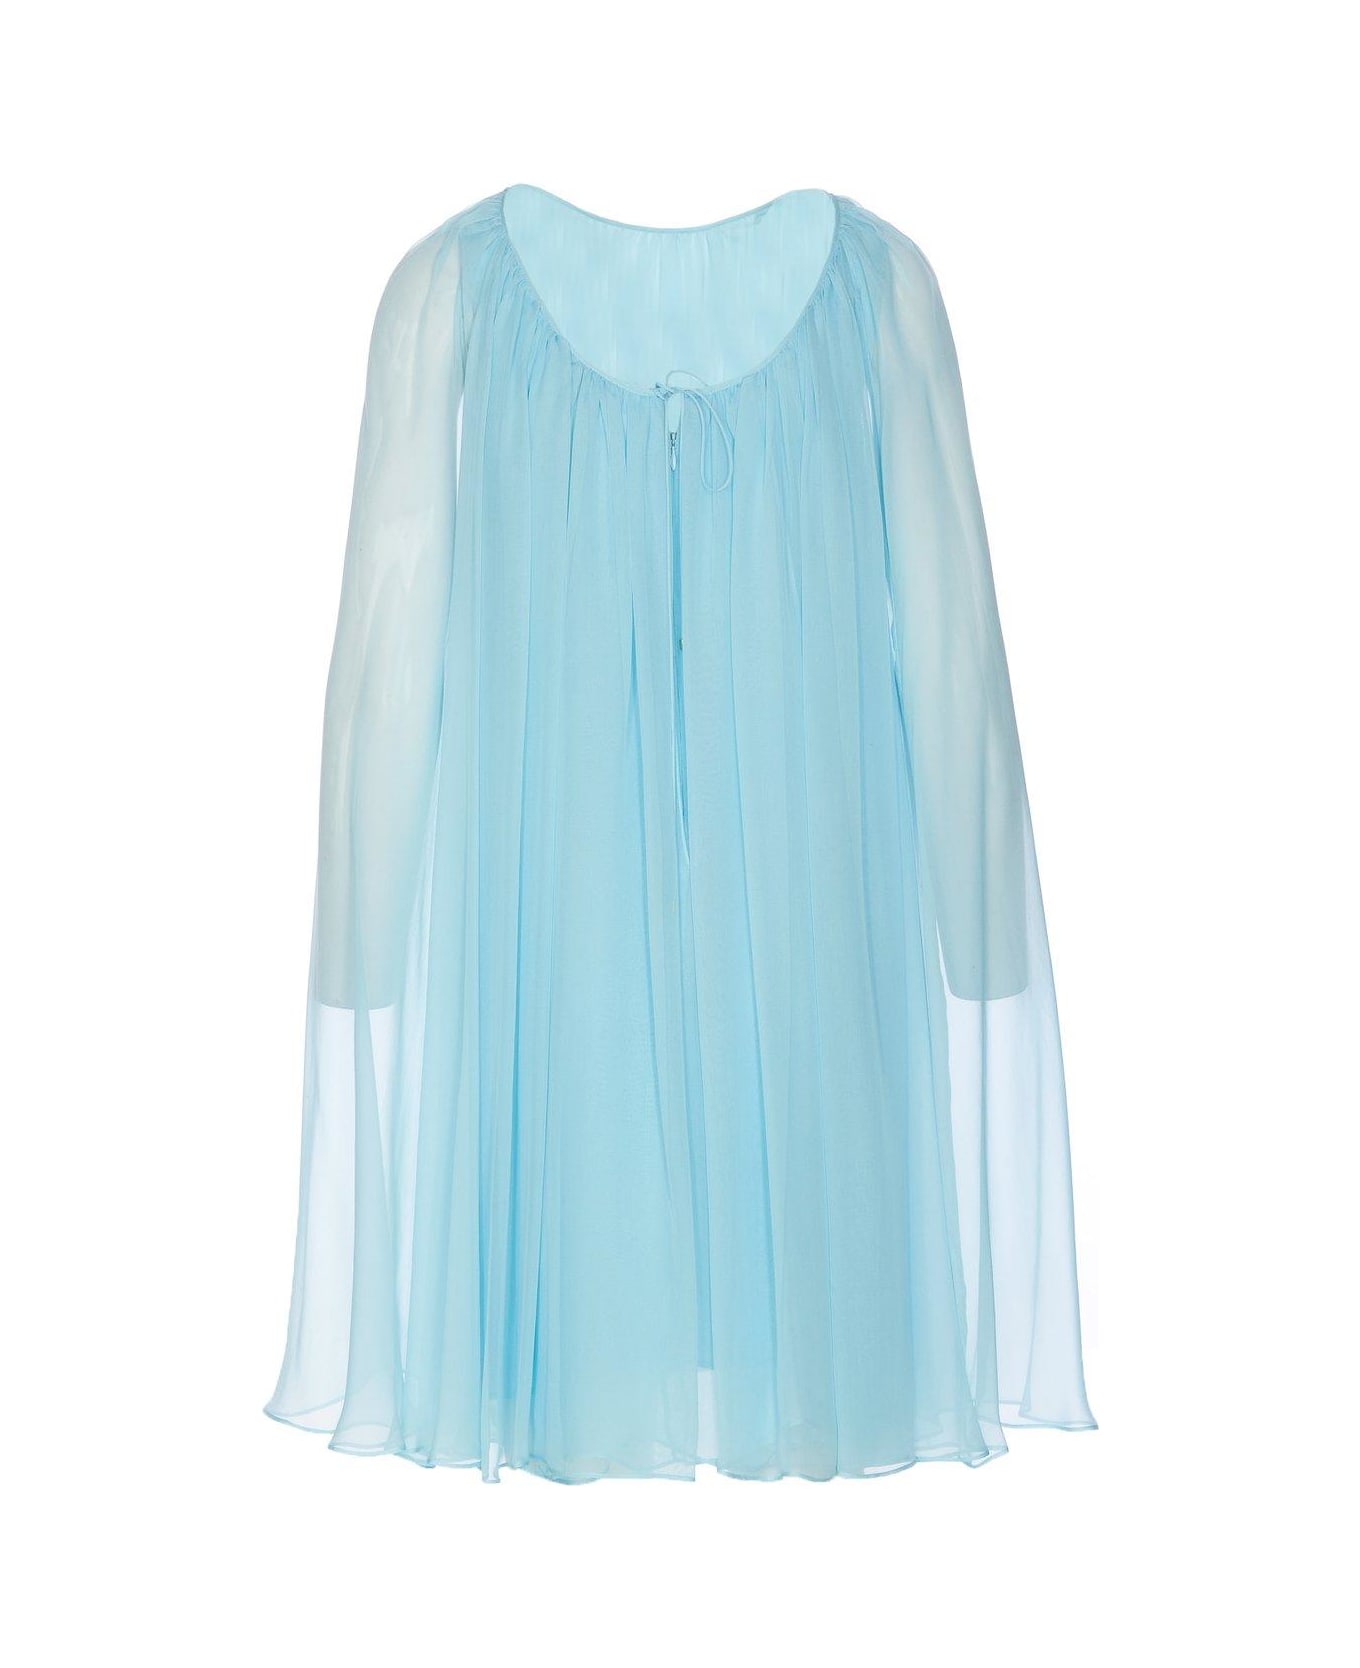 Max Mara Pianoforte Tulle Crewneck Sleeveless Dress - Blue